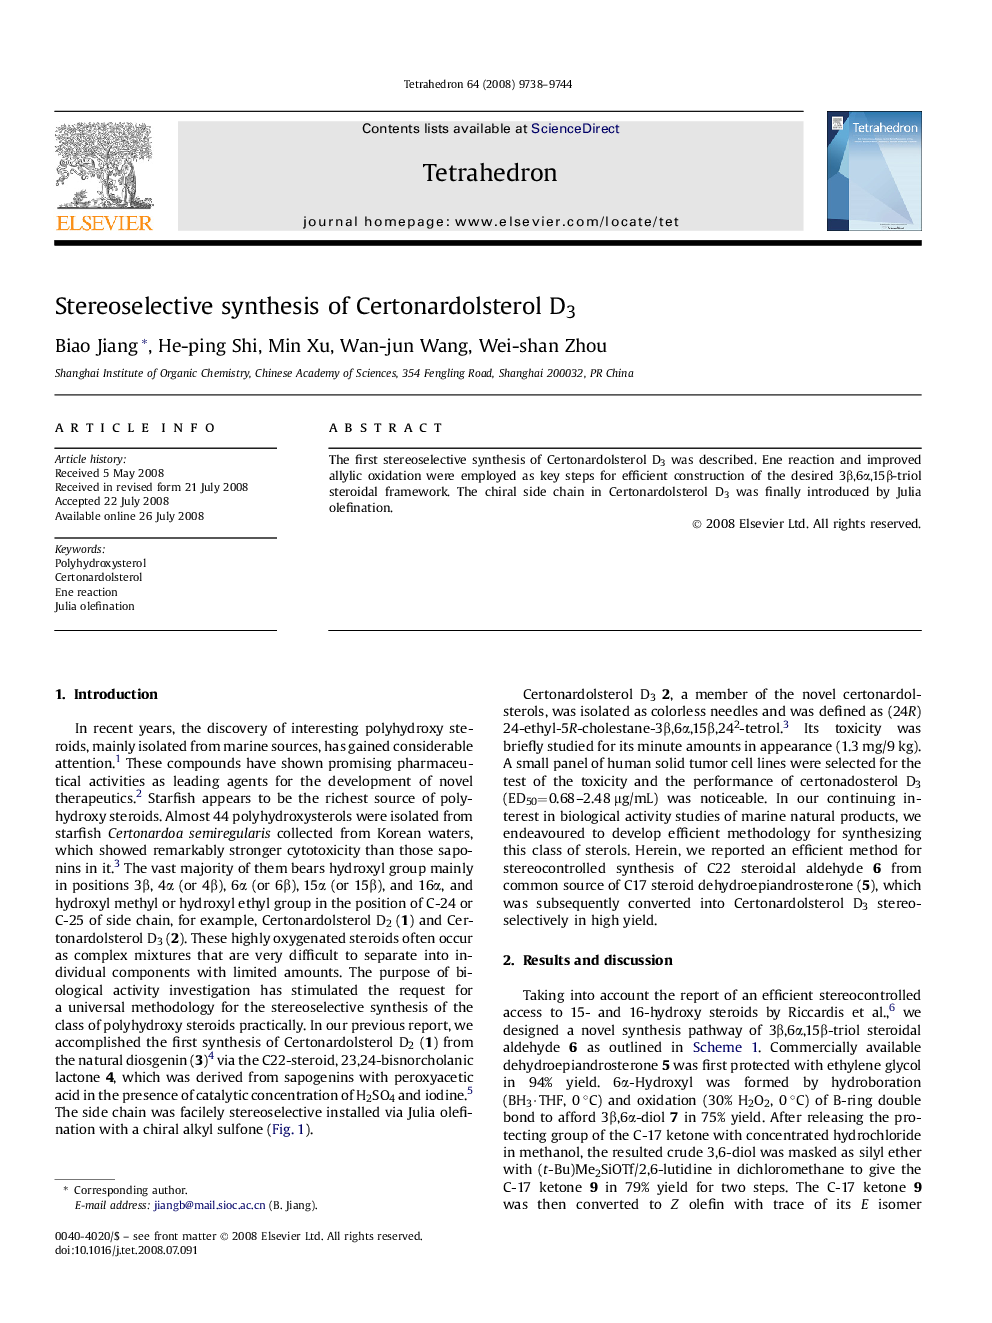 Stereoselective synthesis of Certonardolsterol D3